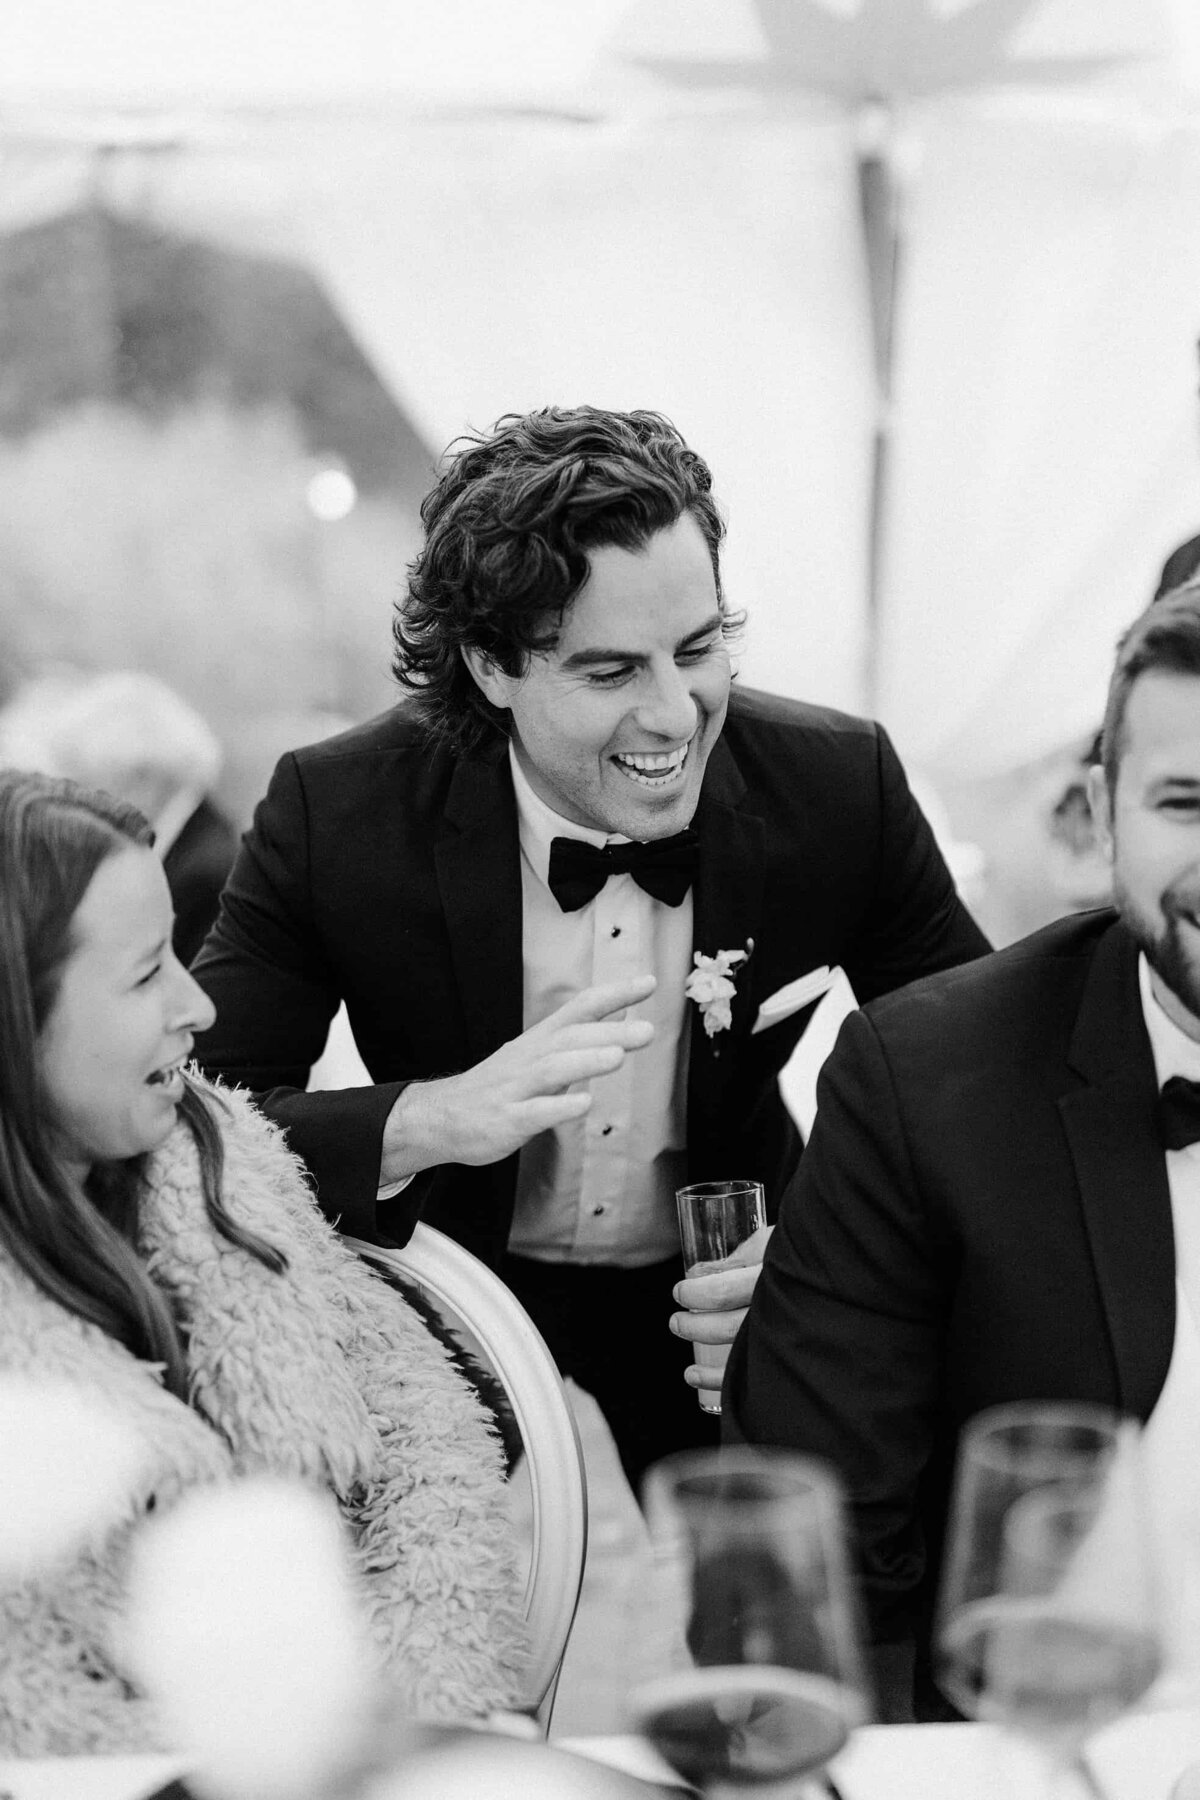 Laughing groomsman at a wedding reception